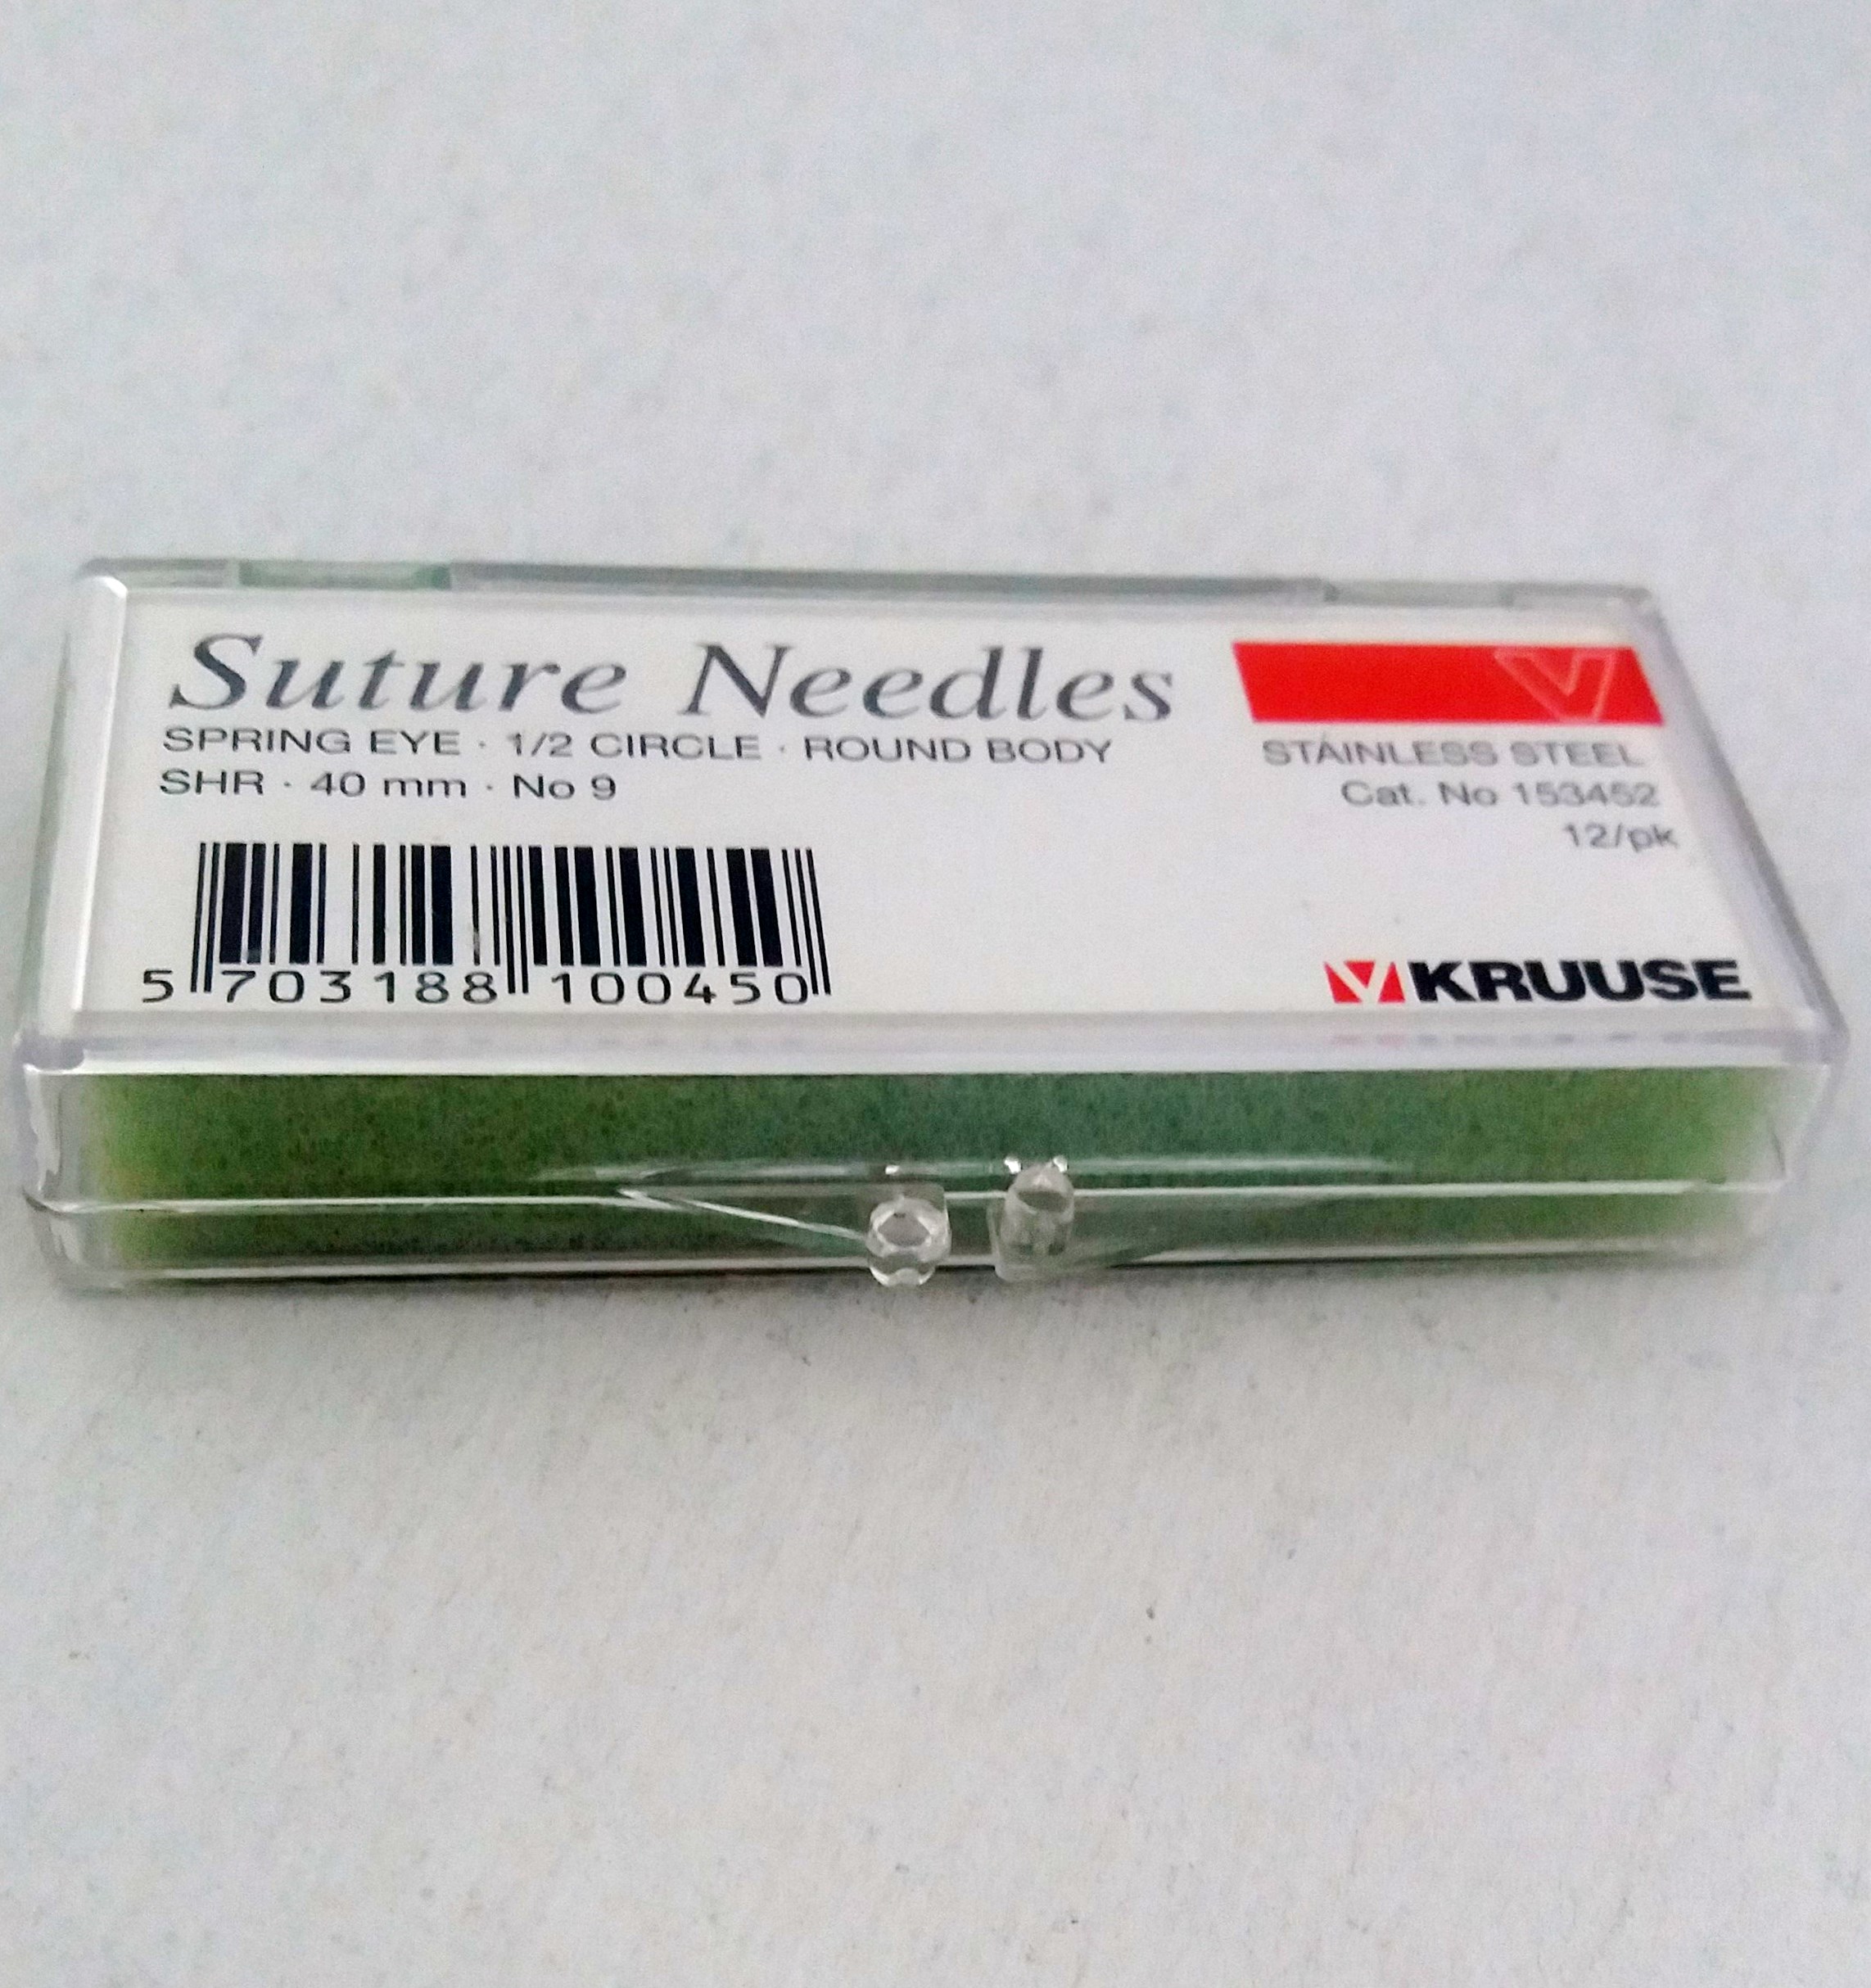 KRUUSE suture needles, SHR 40 mm, No 9